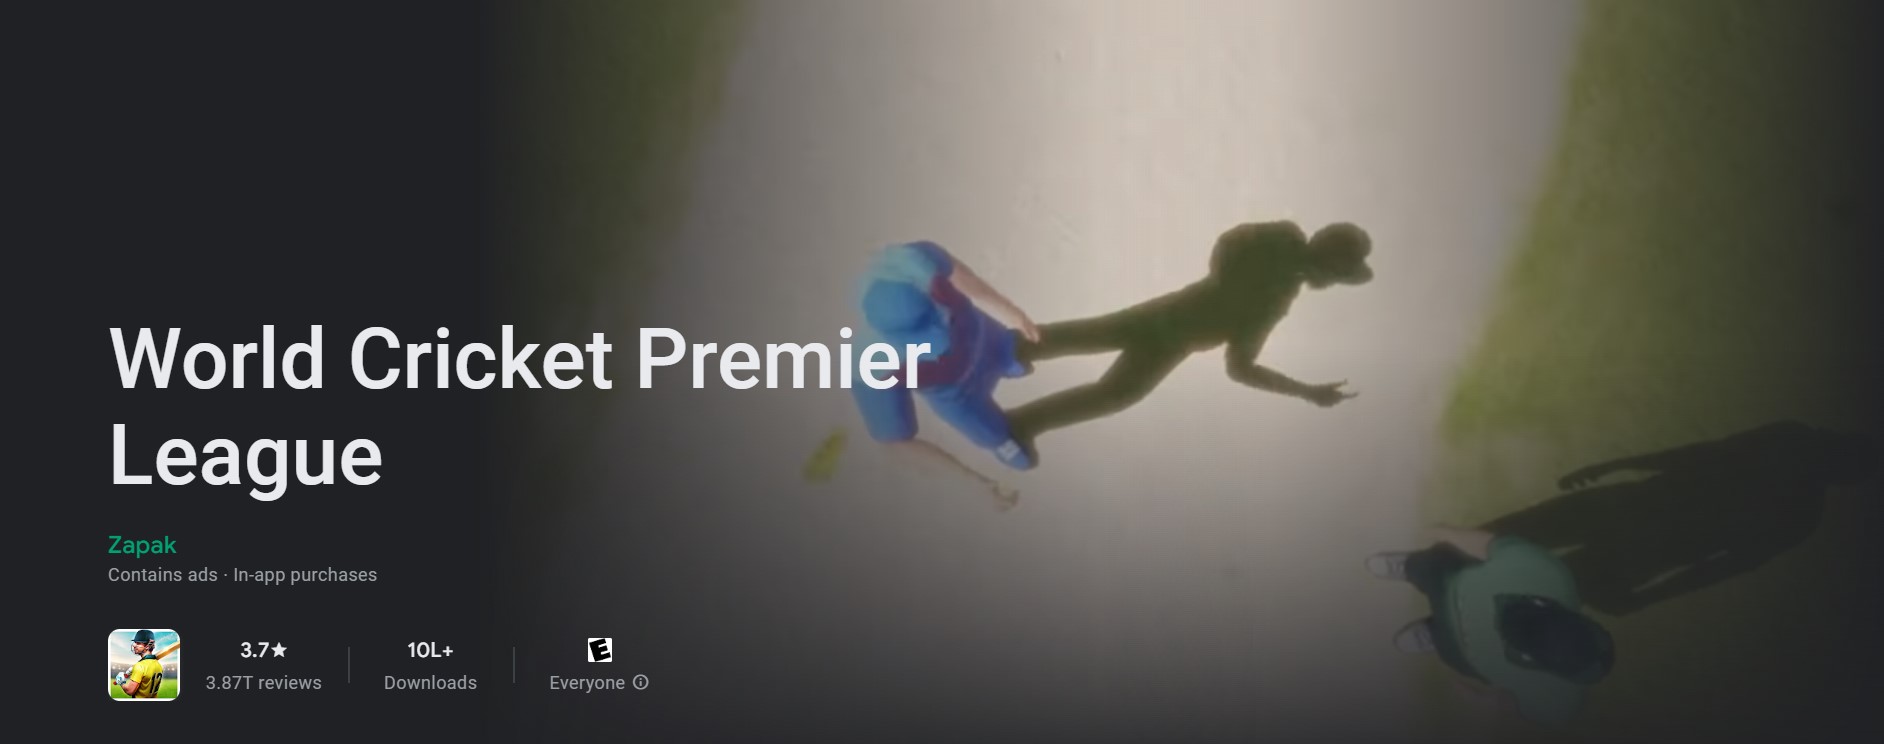 World Cricket Premier League Homepage